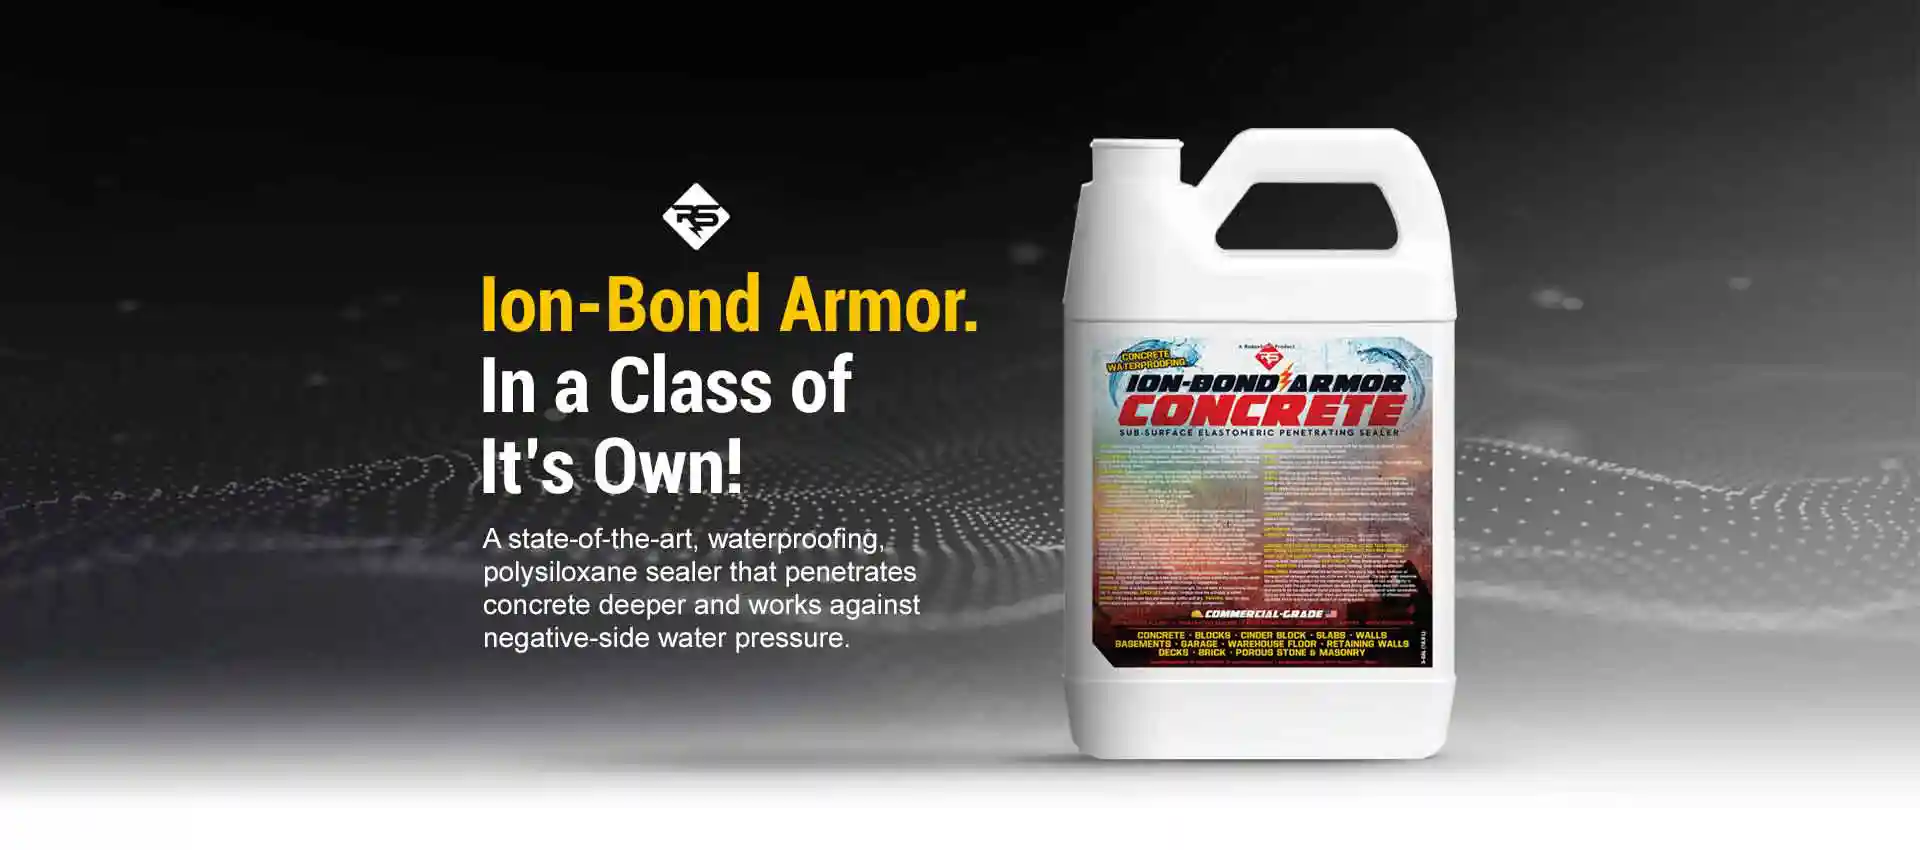 Ion-Bond Armor Waterproofing Concrete and Concrete Block Sealer